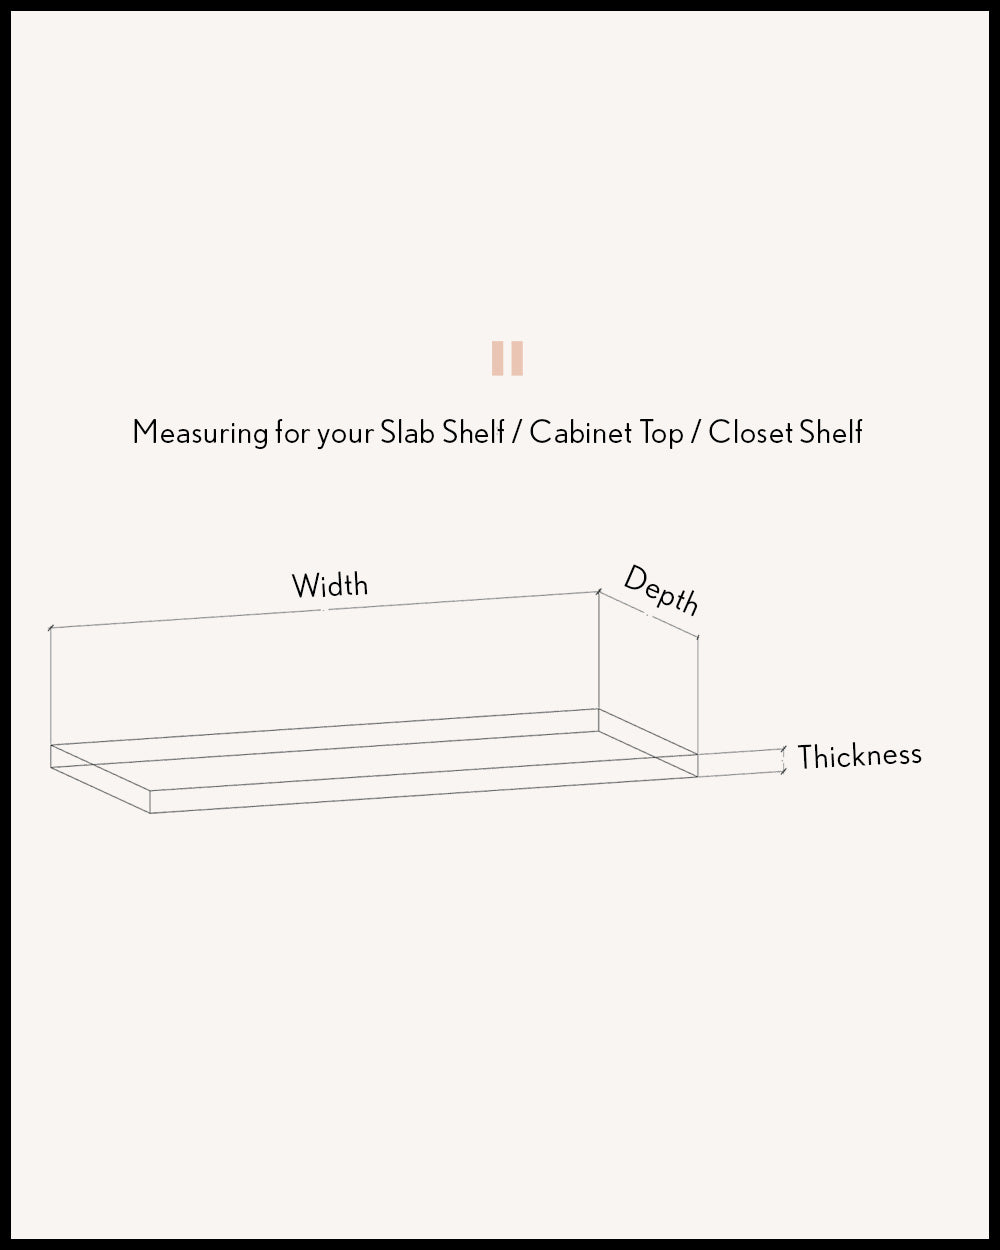 Cherry 2-4" thick Cabinet Top / Slab Shelf